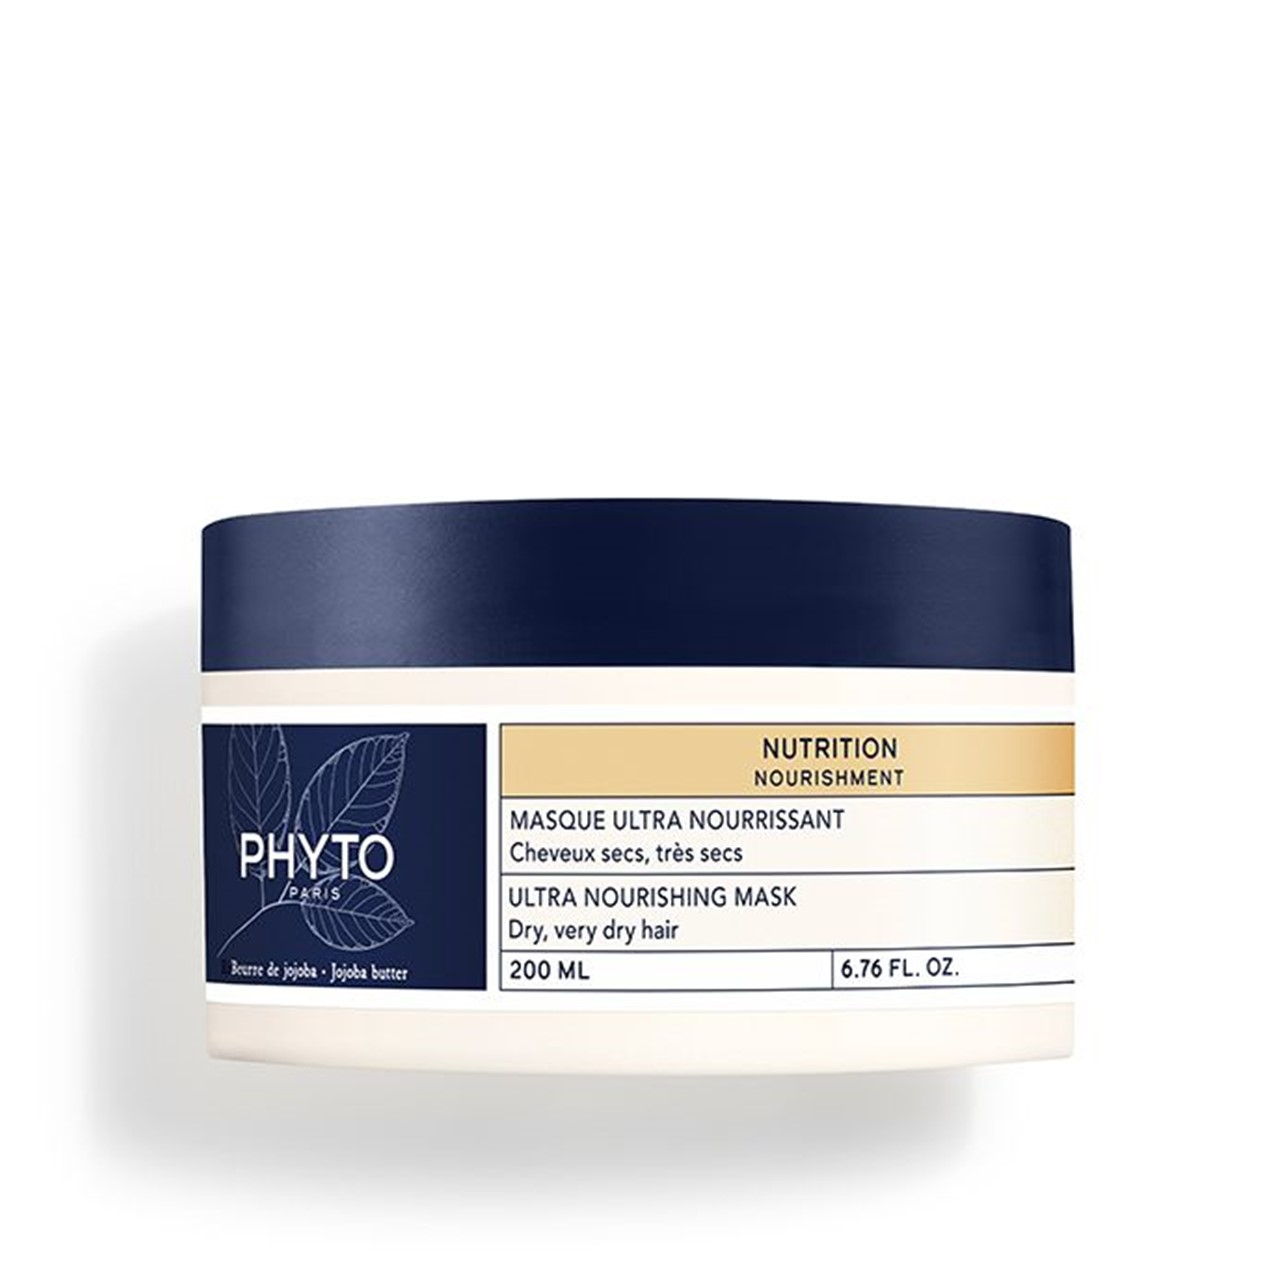 Phyto Nourishment Ultra Nourishing Mask 200ml (6.76 fl oz)